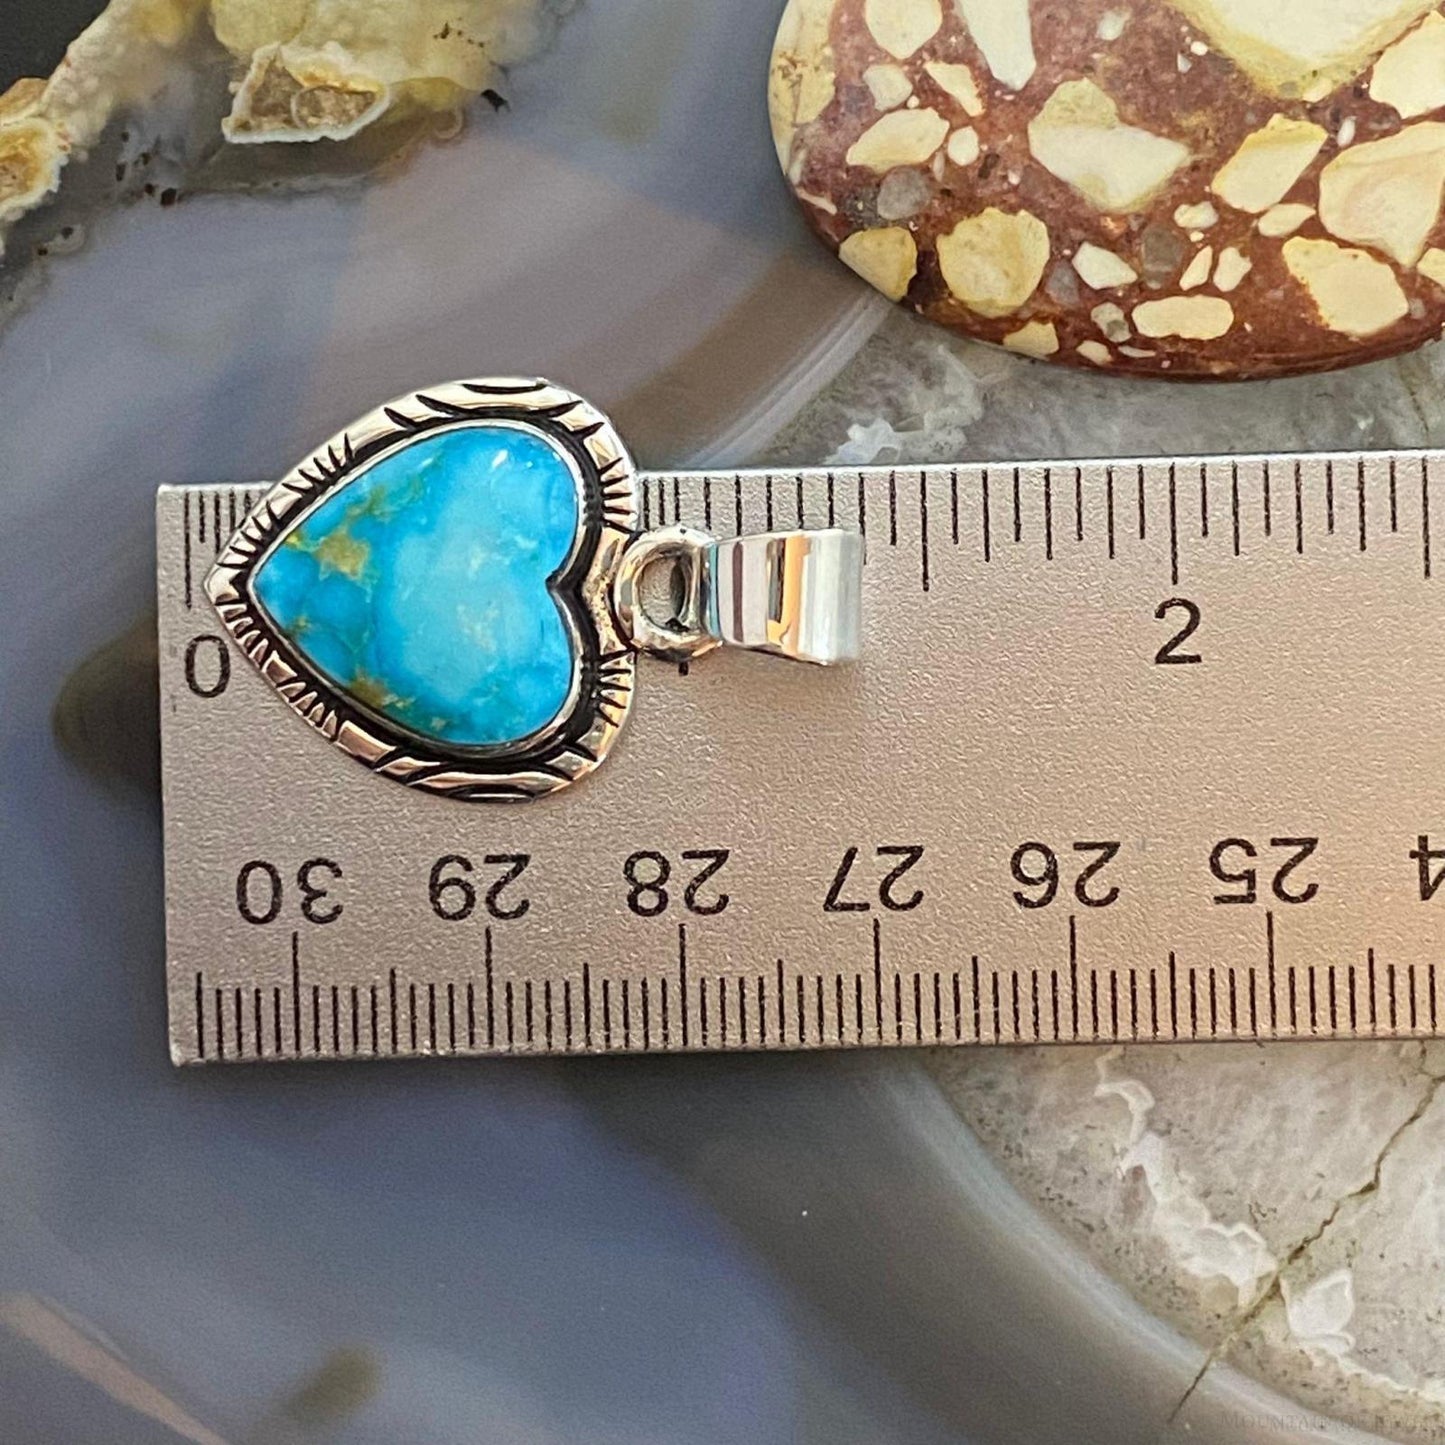 Native American Sterling Silver Blue Ridge Turquoise Heart Pendant For Women #7